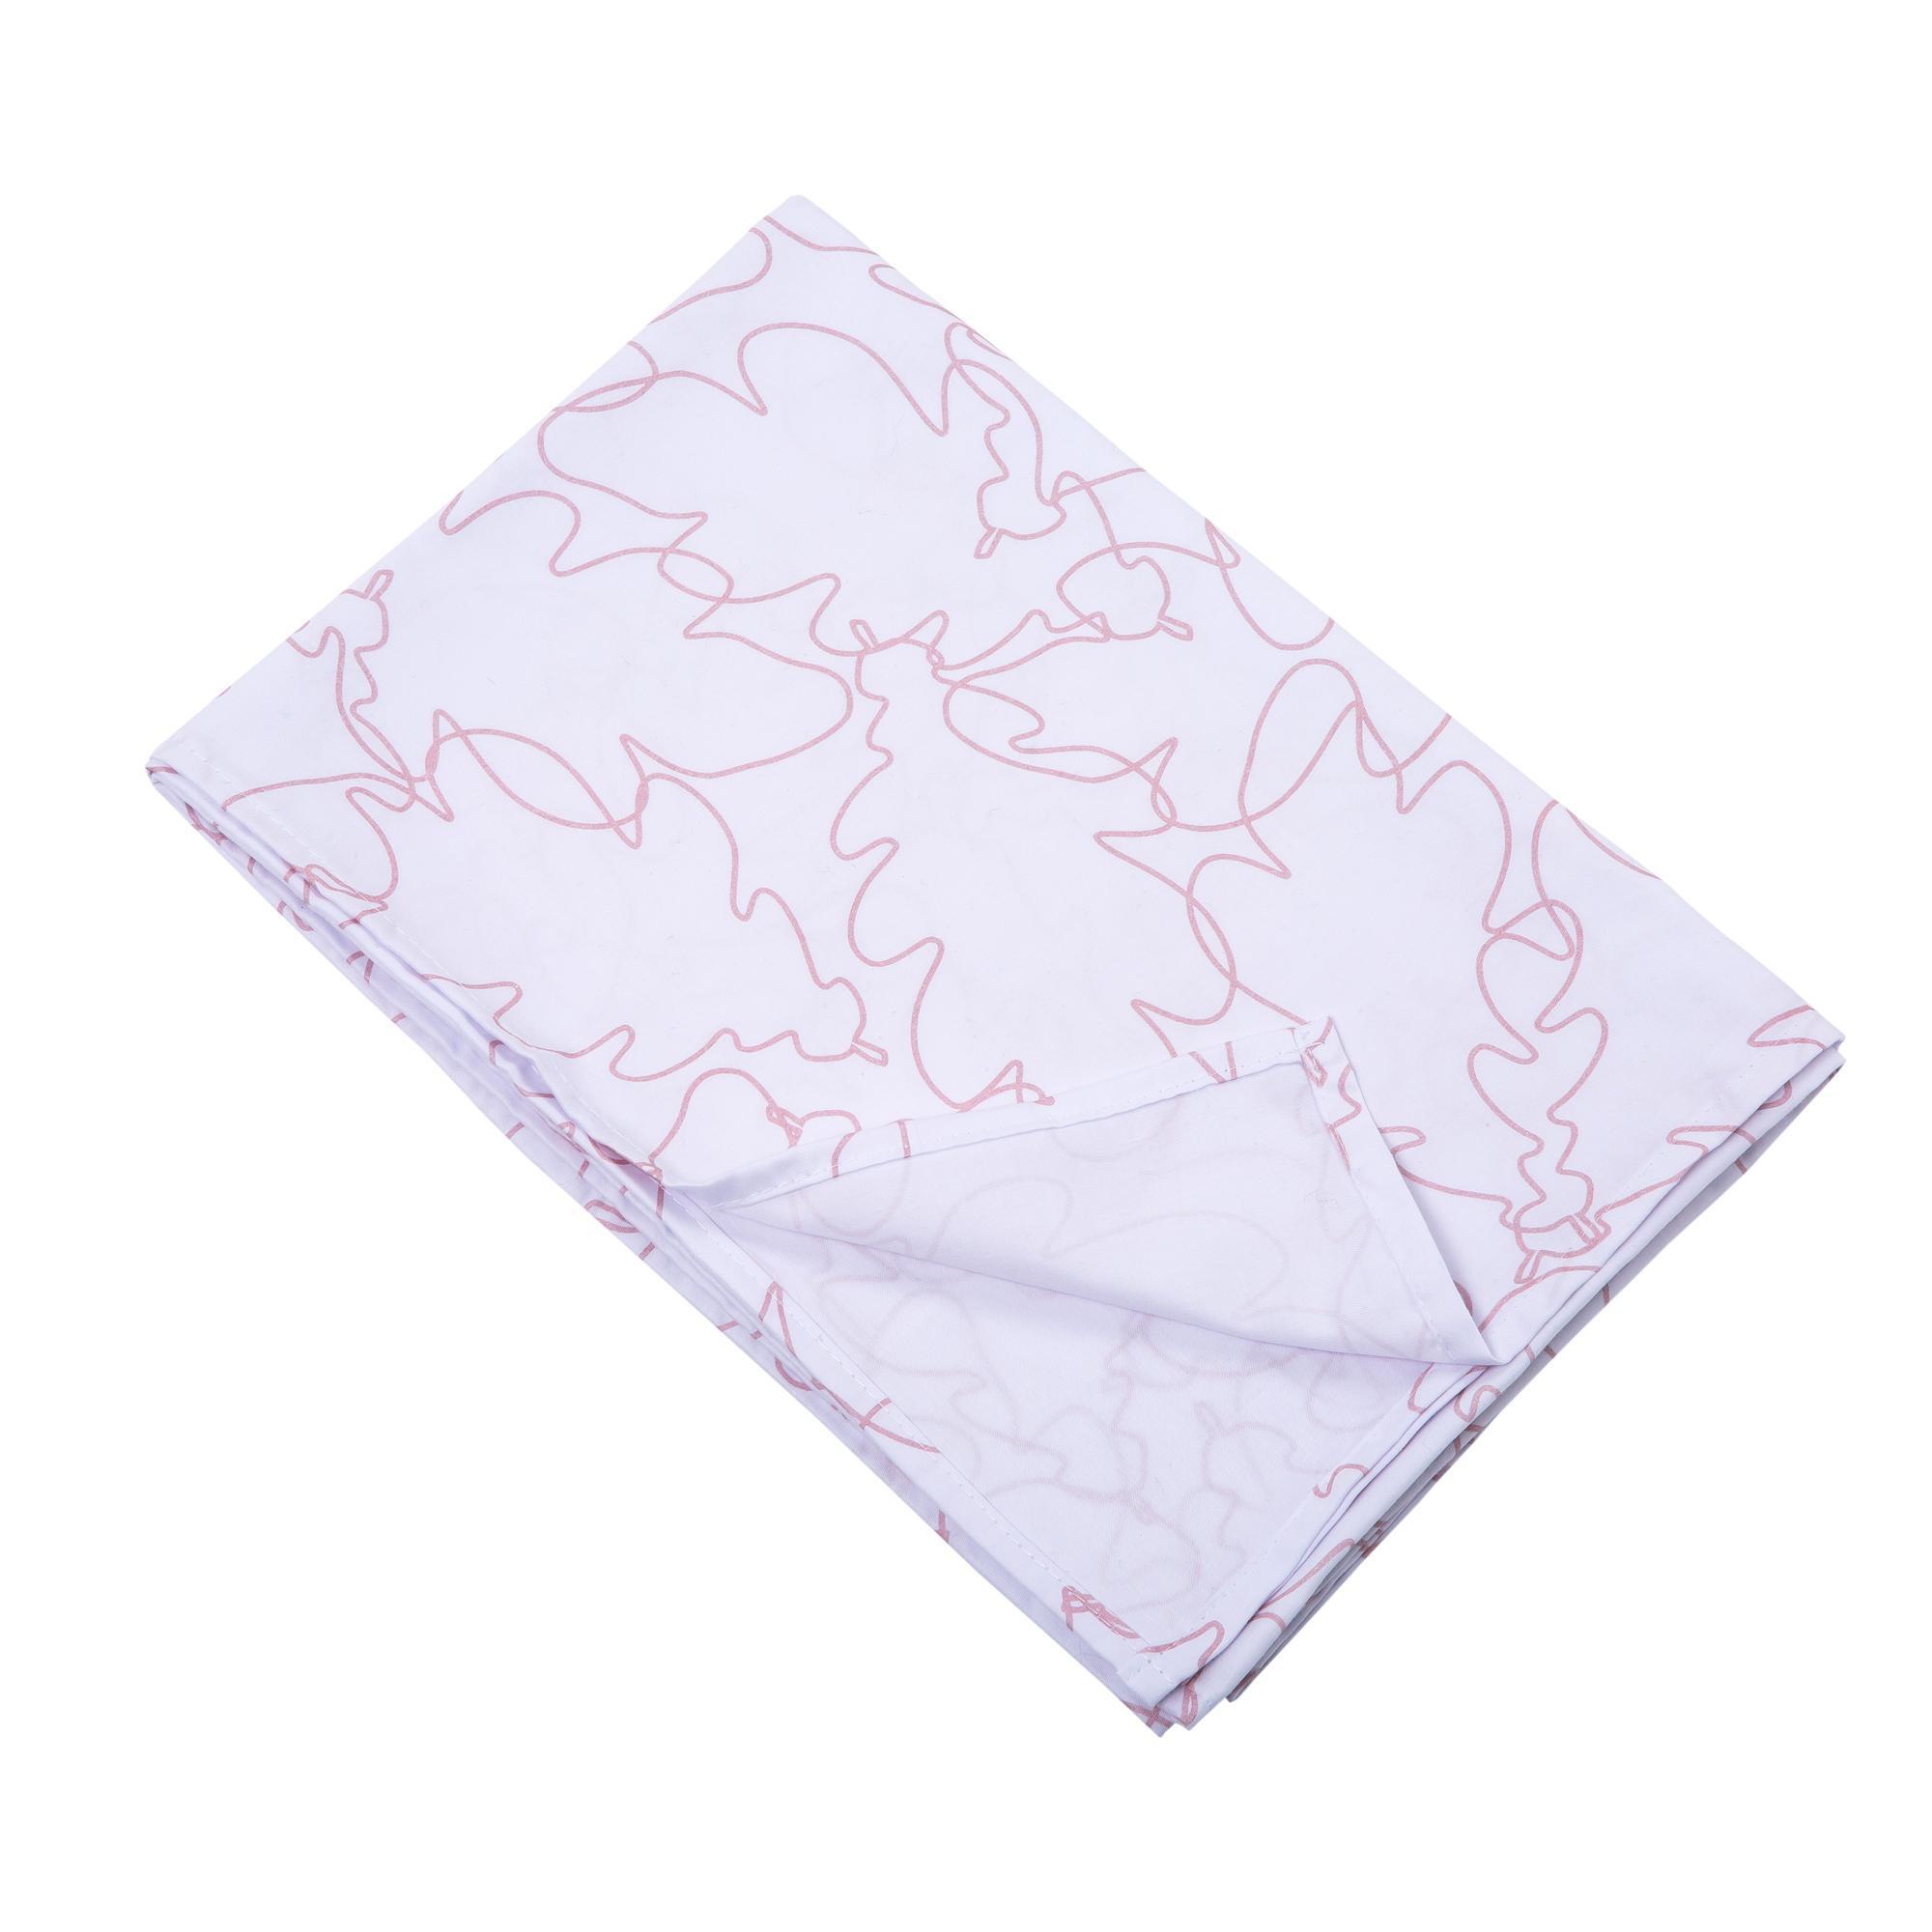 Nordbaby Flat bed sheet 100*150cm, Pink/Frozen Leaves - Nordbaby